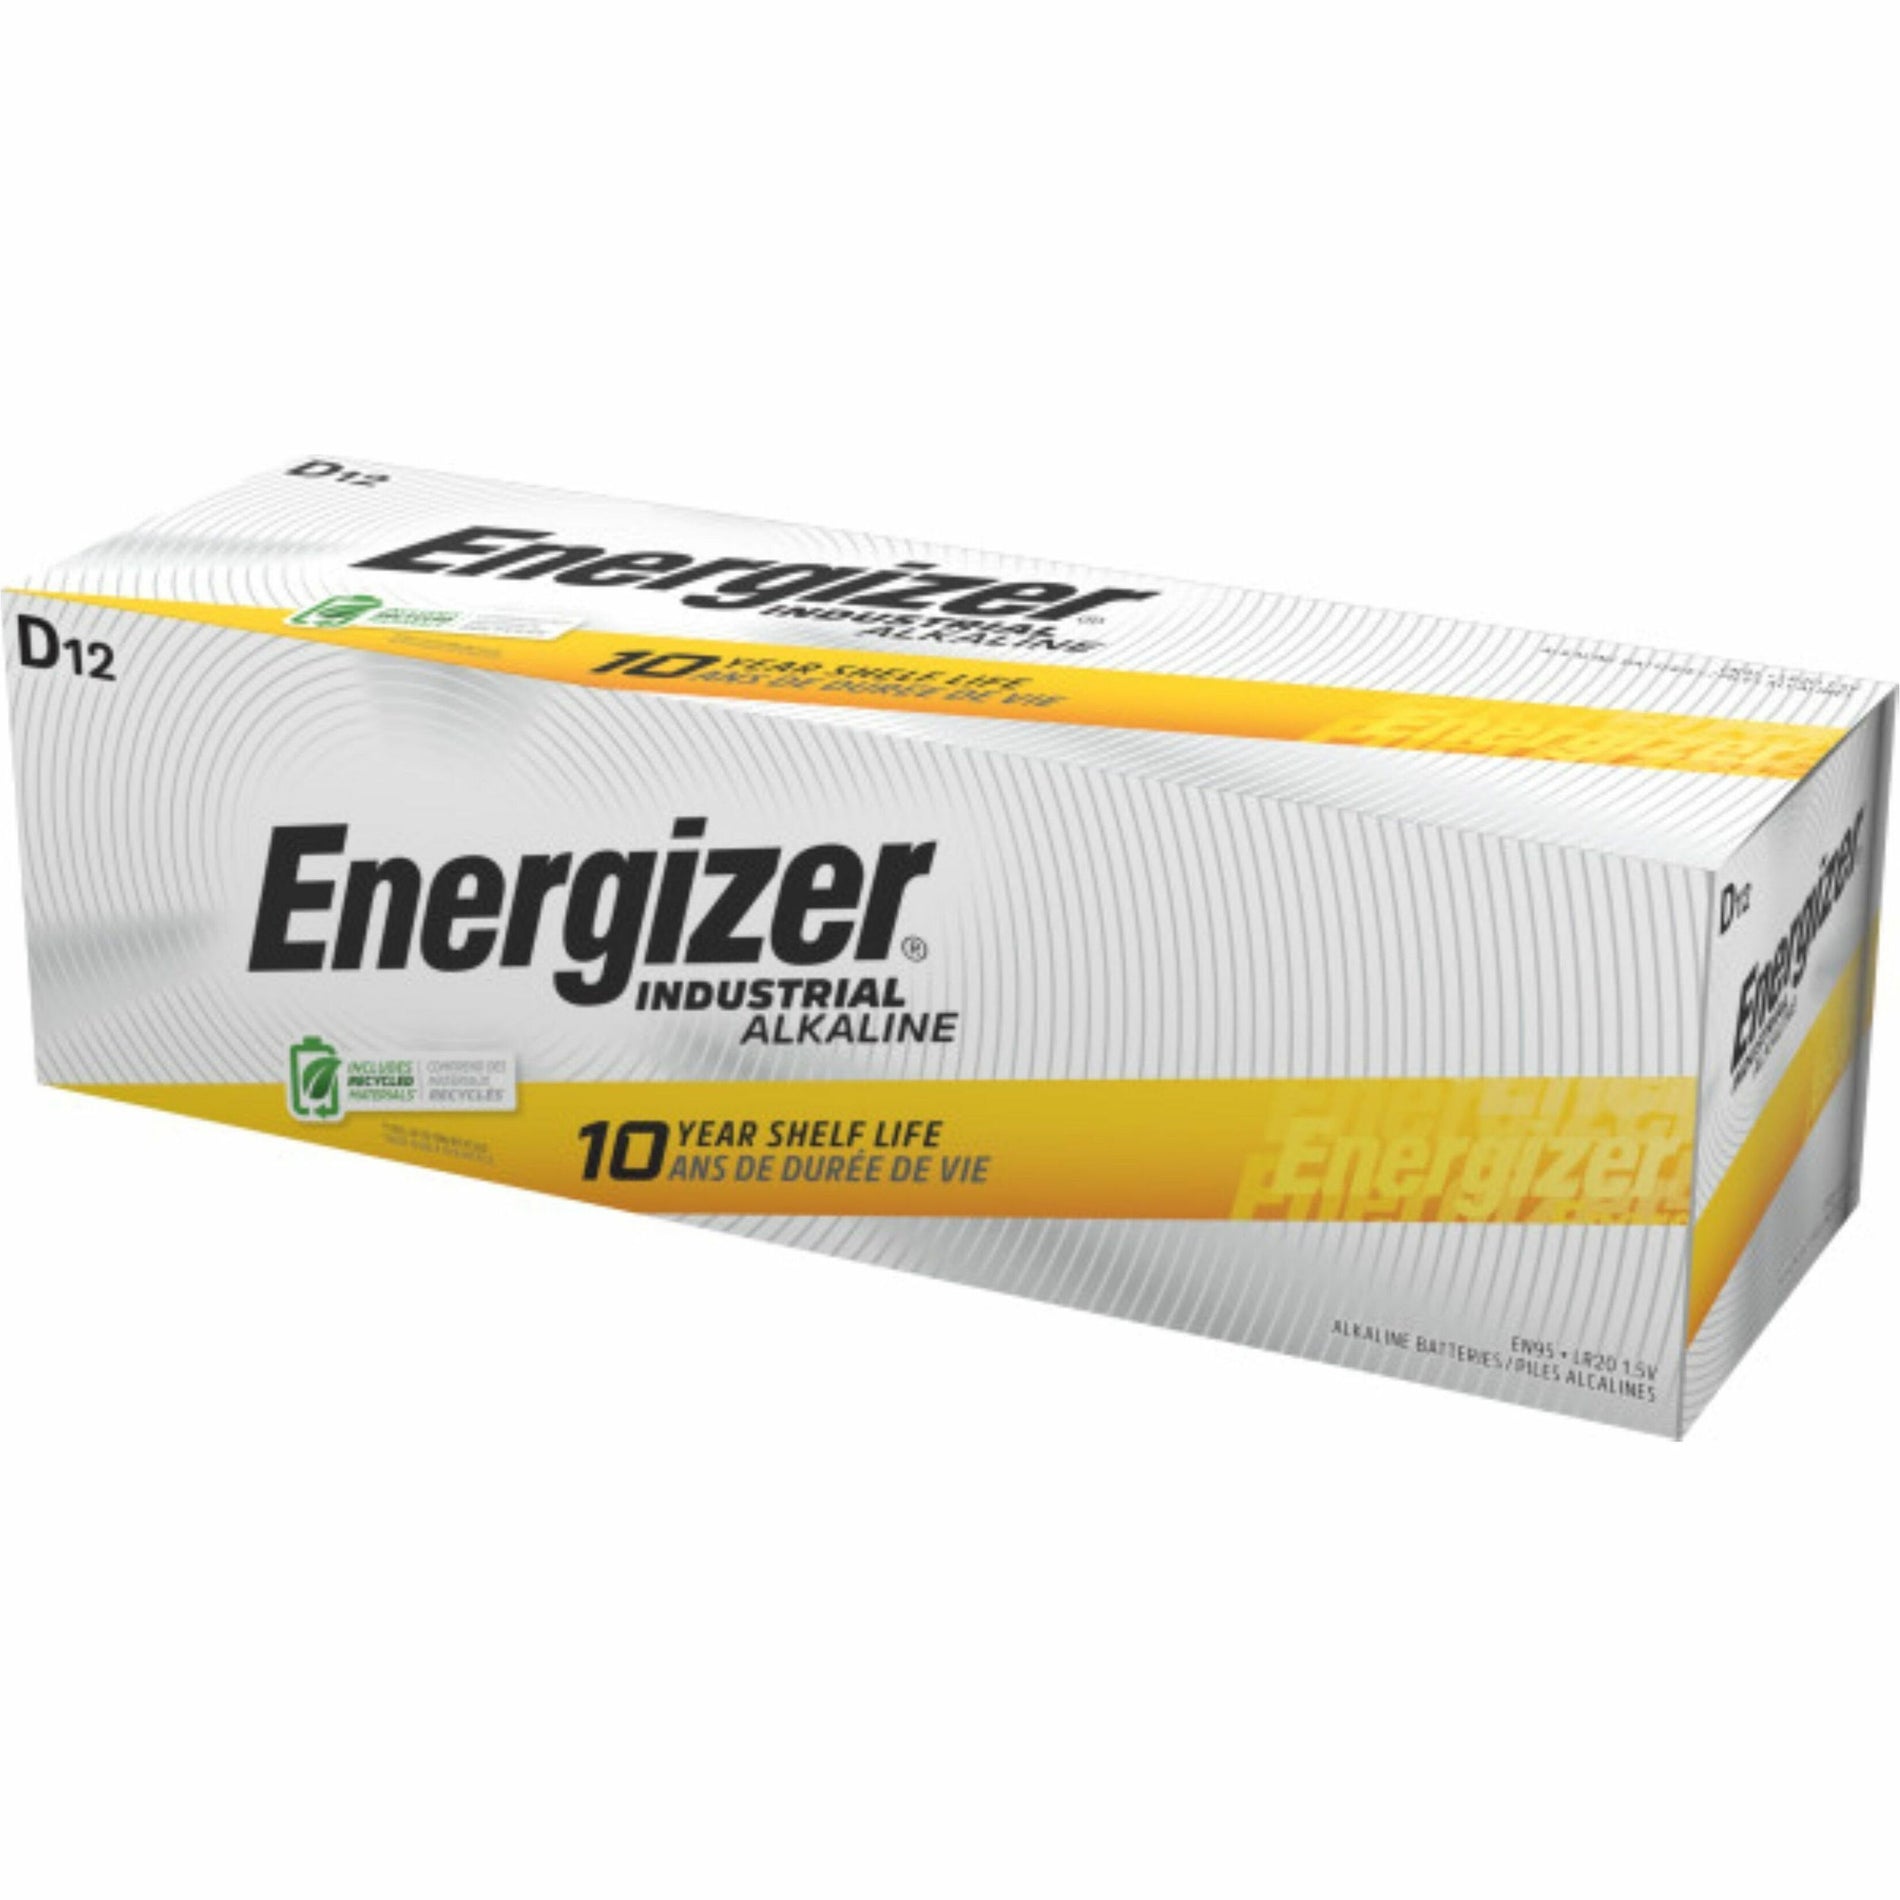 Energizer EN95 Industrial Alkaline D Batteries, Long-Lasting Power for Cameras, Toys, Radios, Flashlights